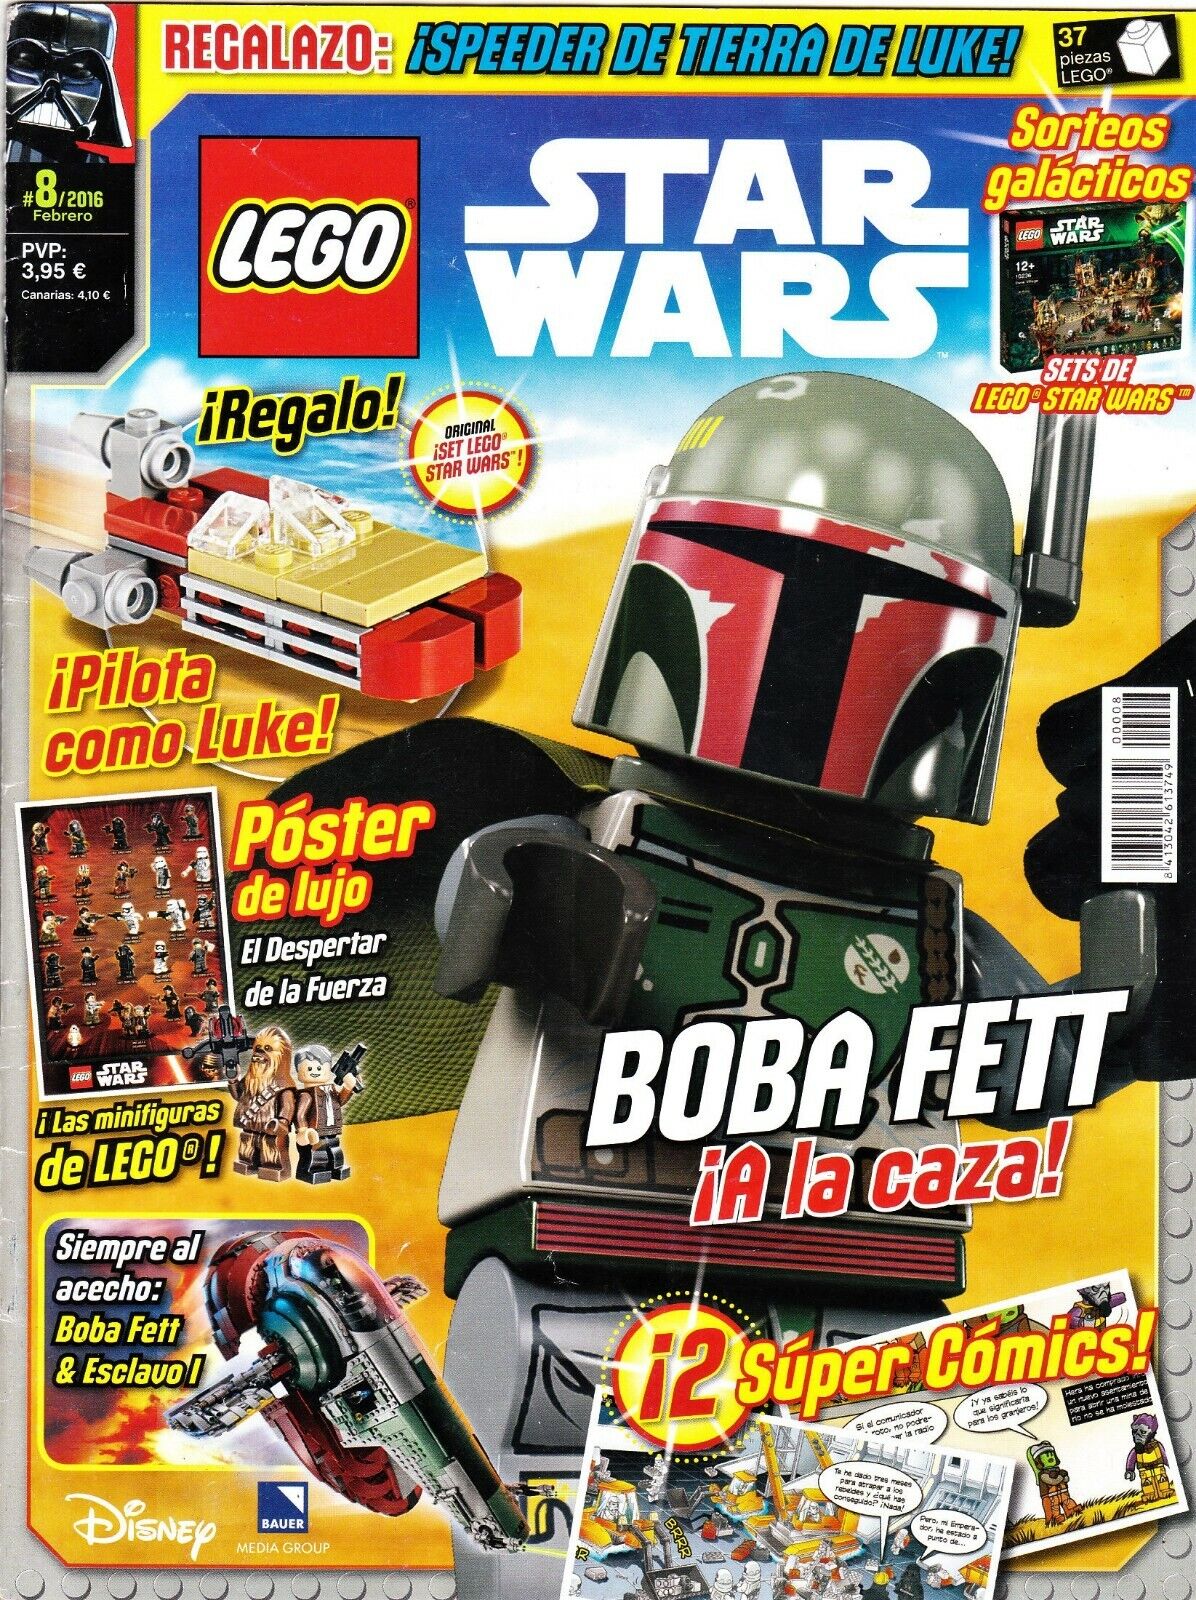 LEGO WARS revista nº: 8 Sin juguete ni póster de regalo. |